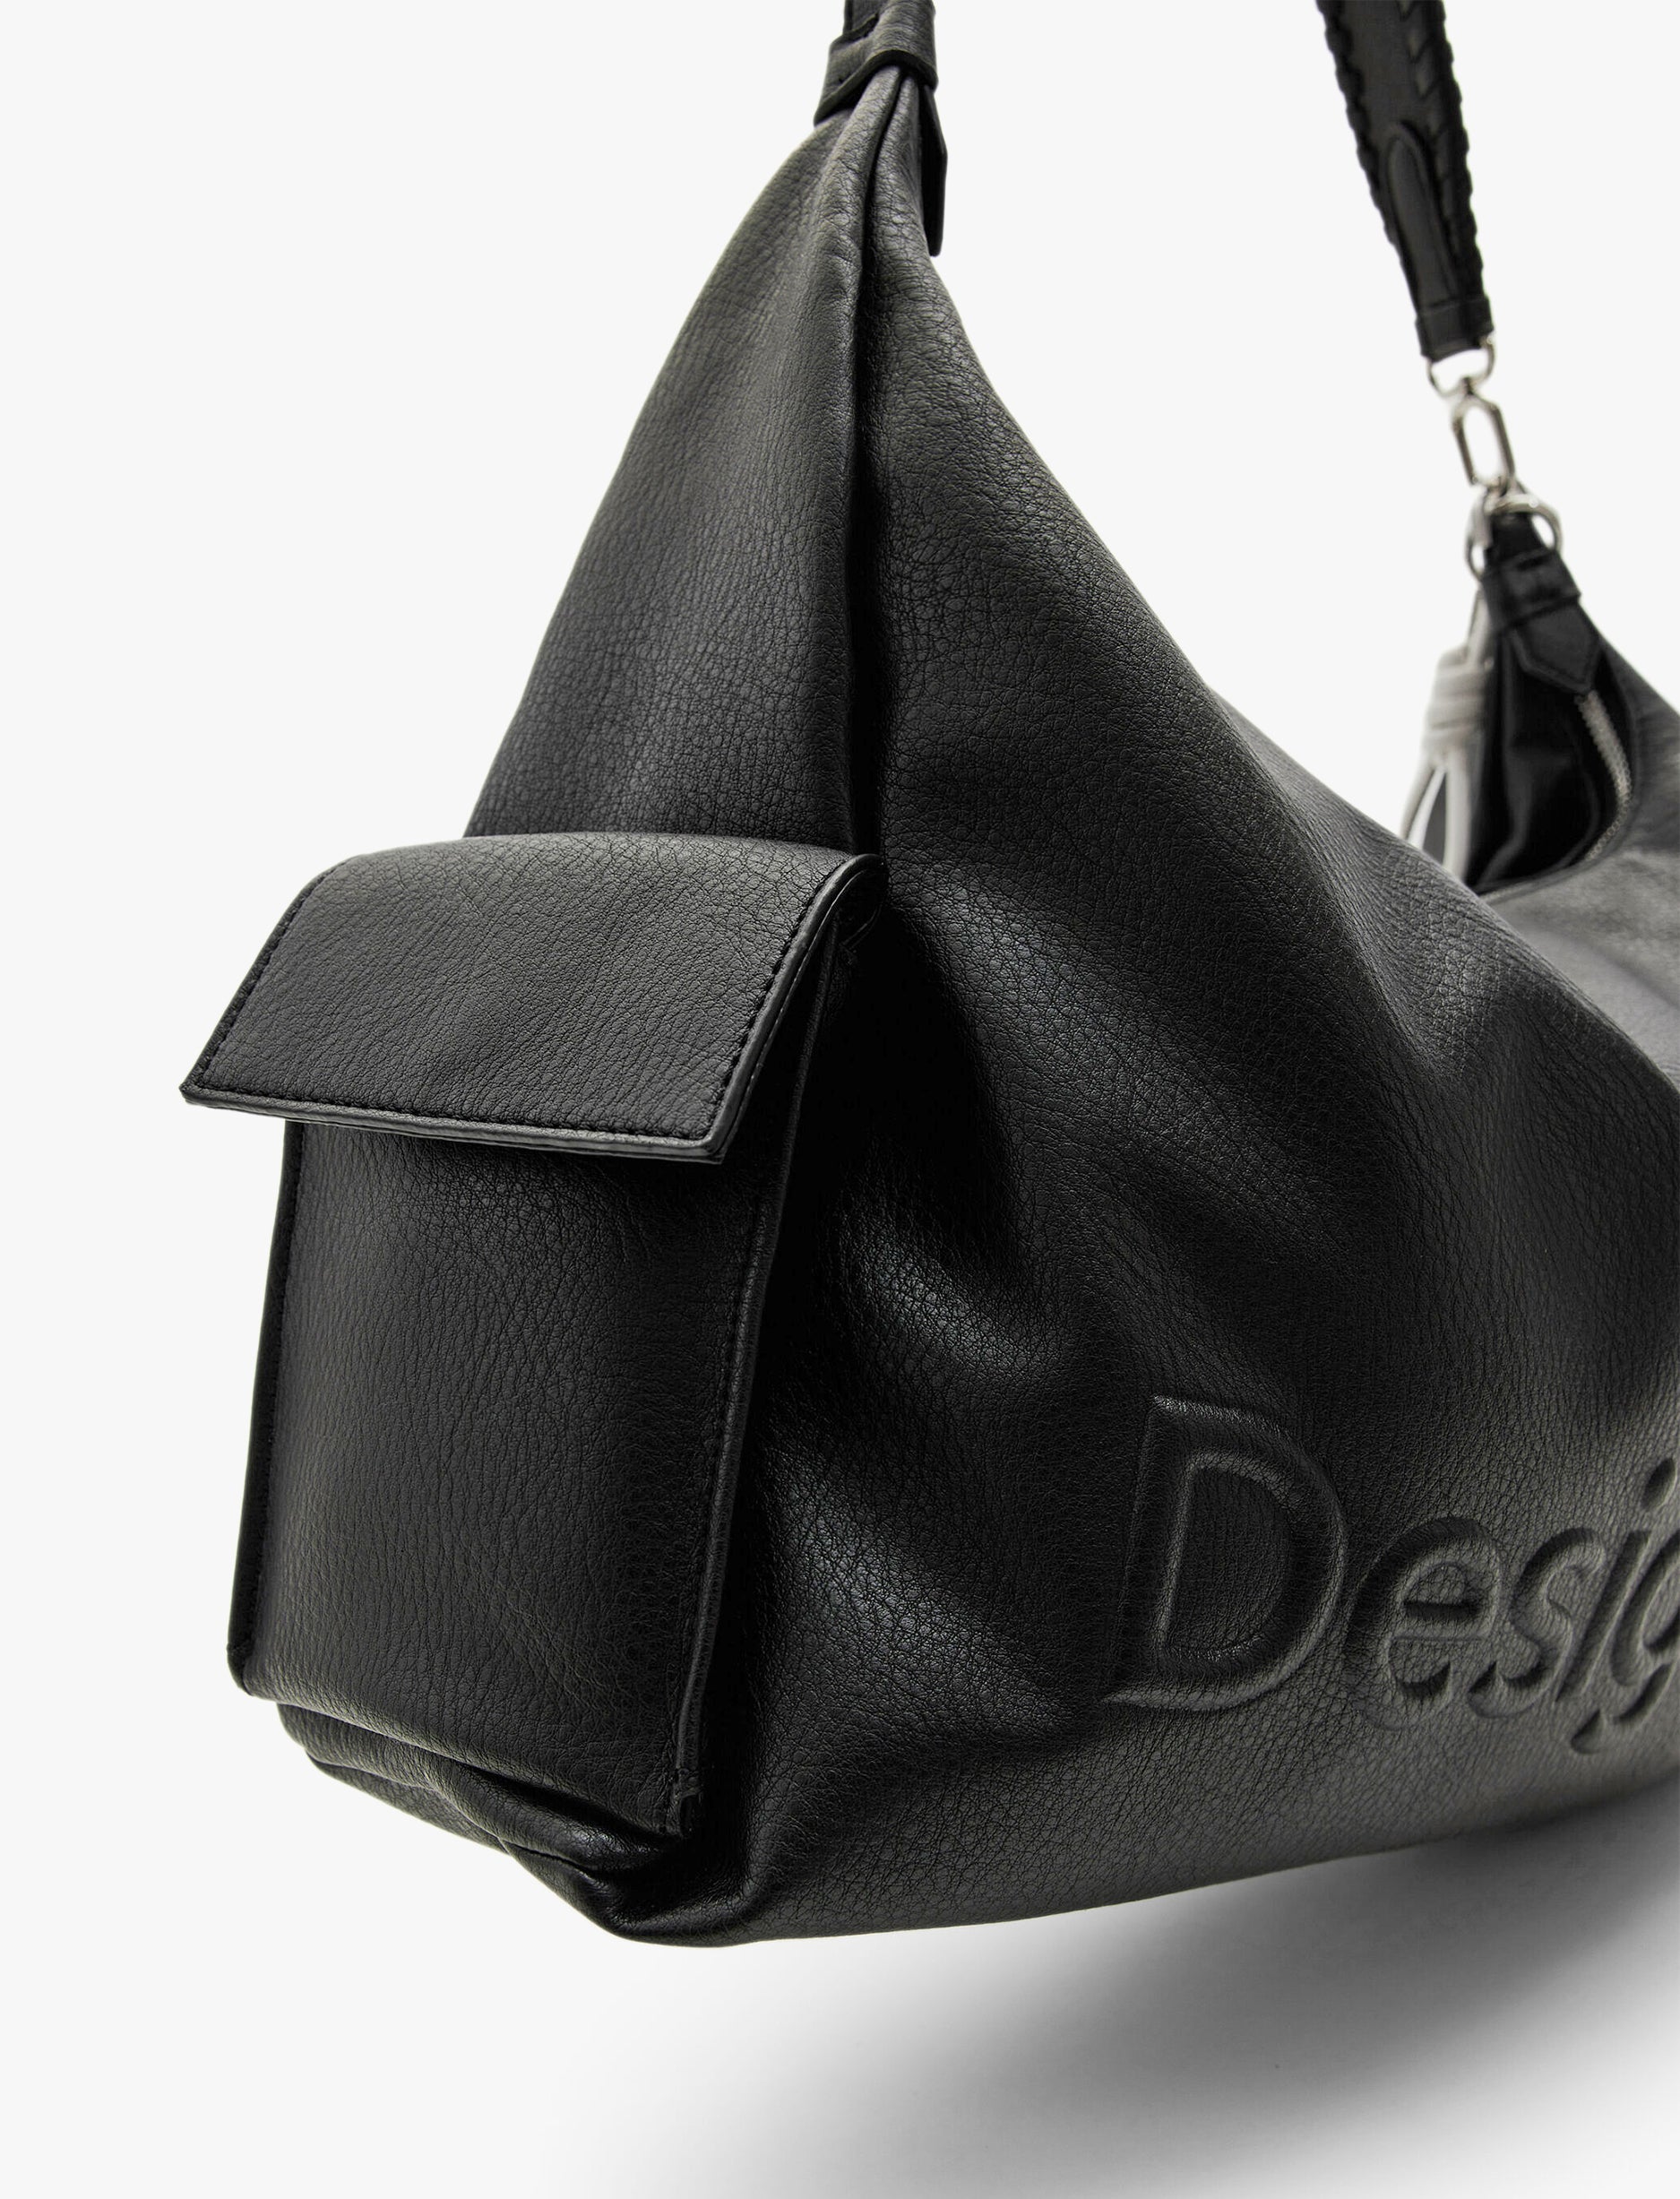 Desigual Bag Half Logo 24 Brasilia - תיק יד בצבע שחור